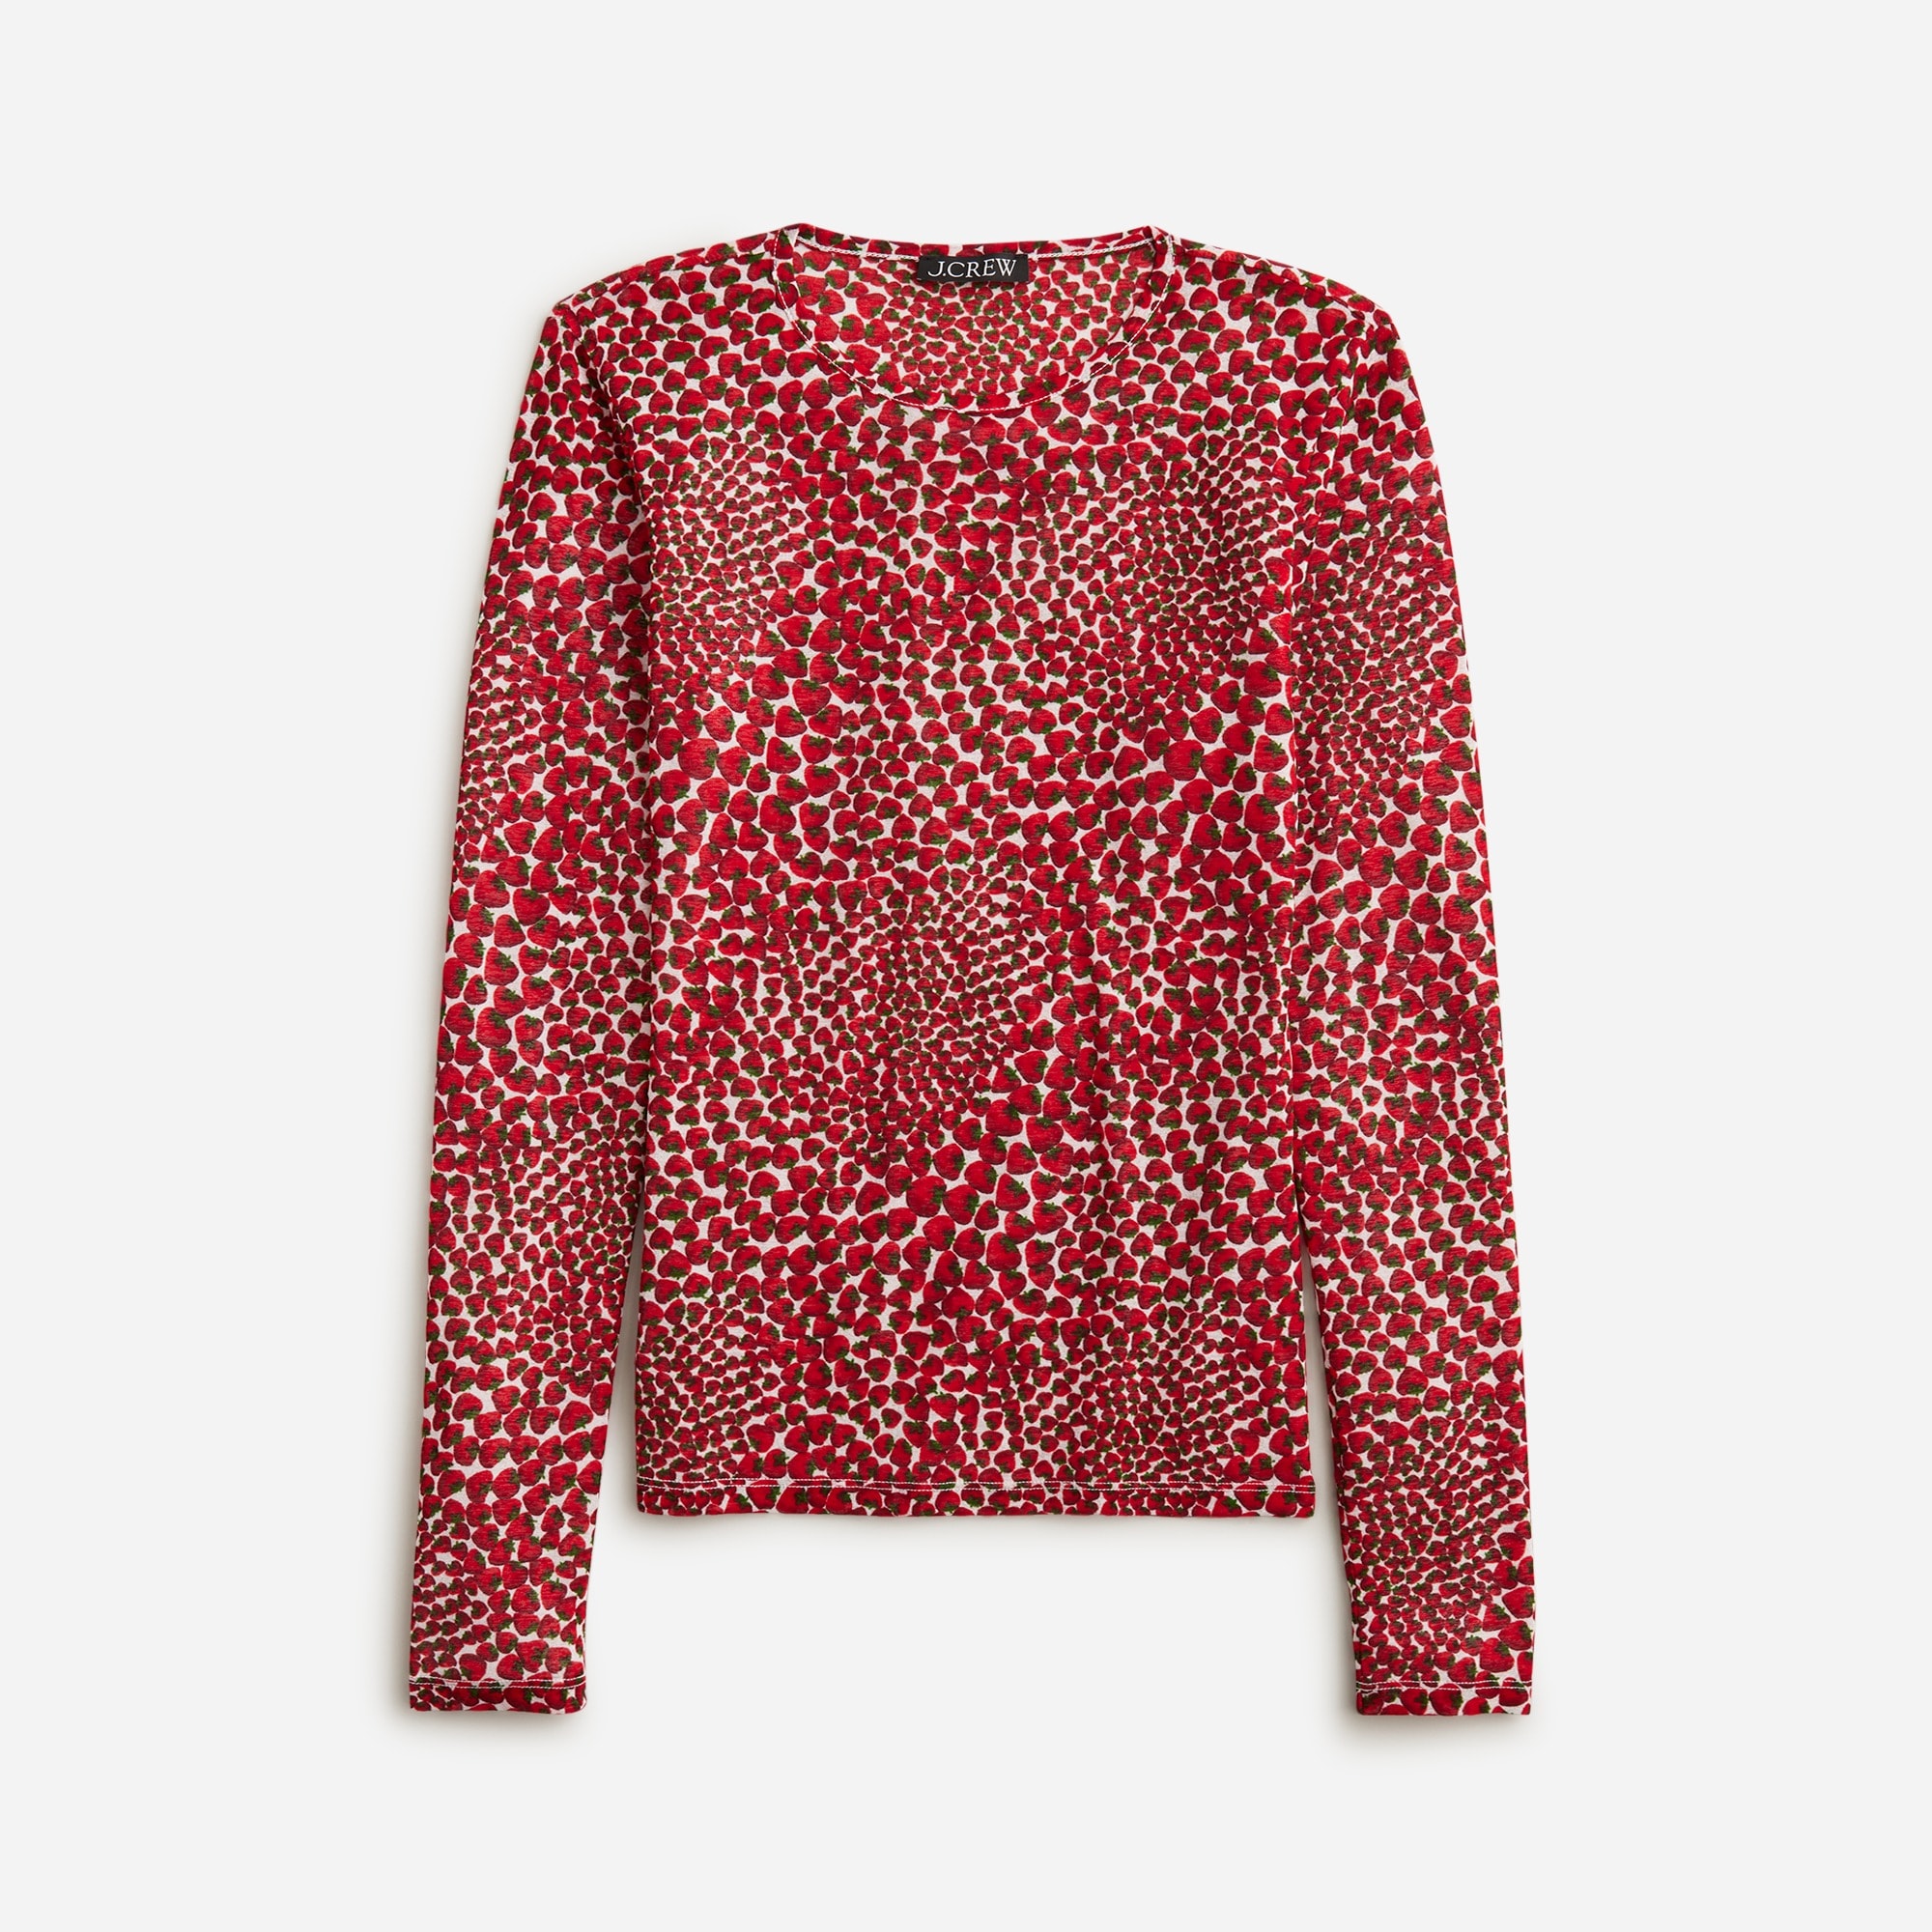  Sheer long-sleeve top in strawberry swirl print